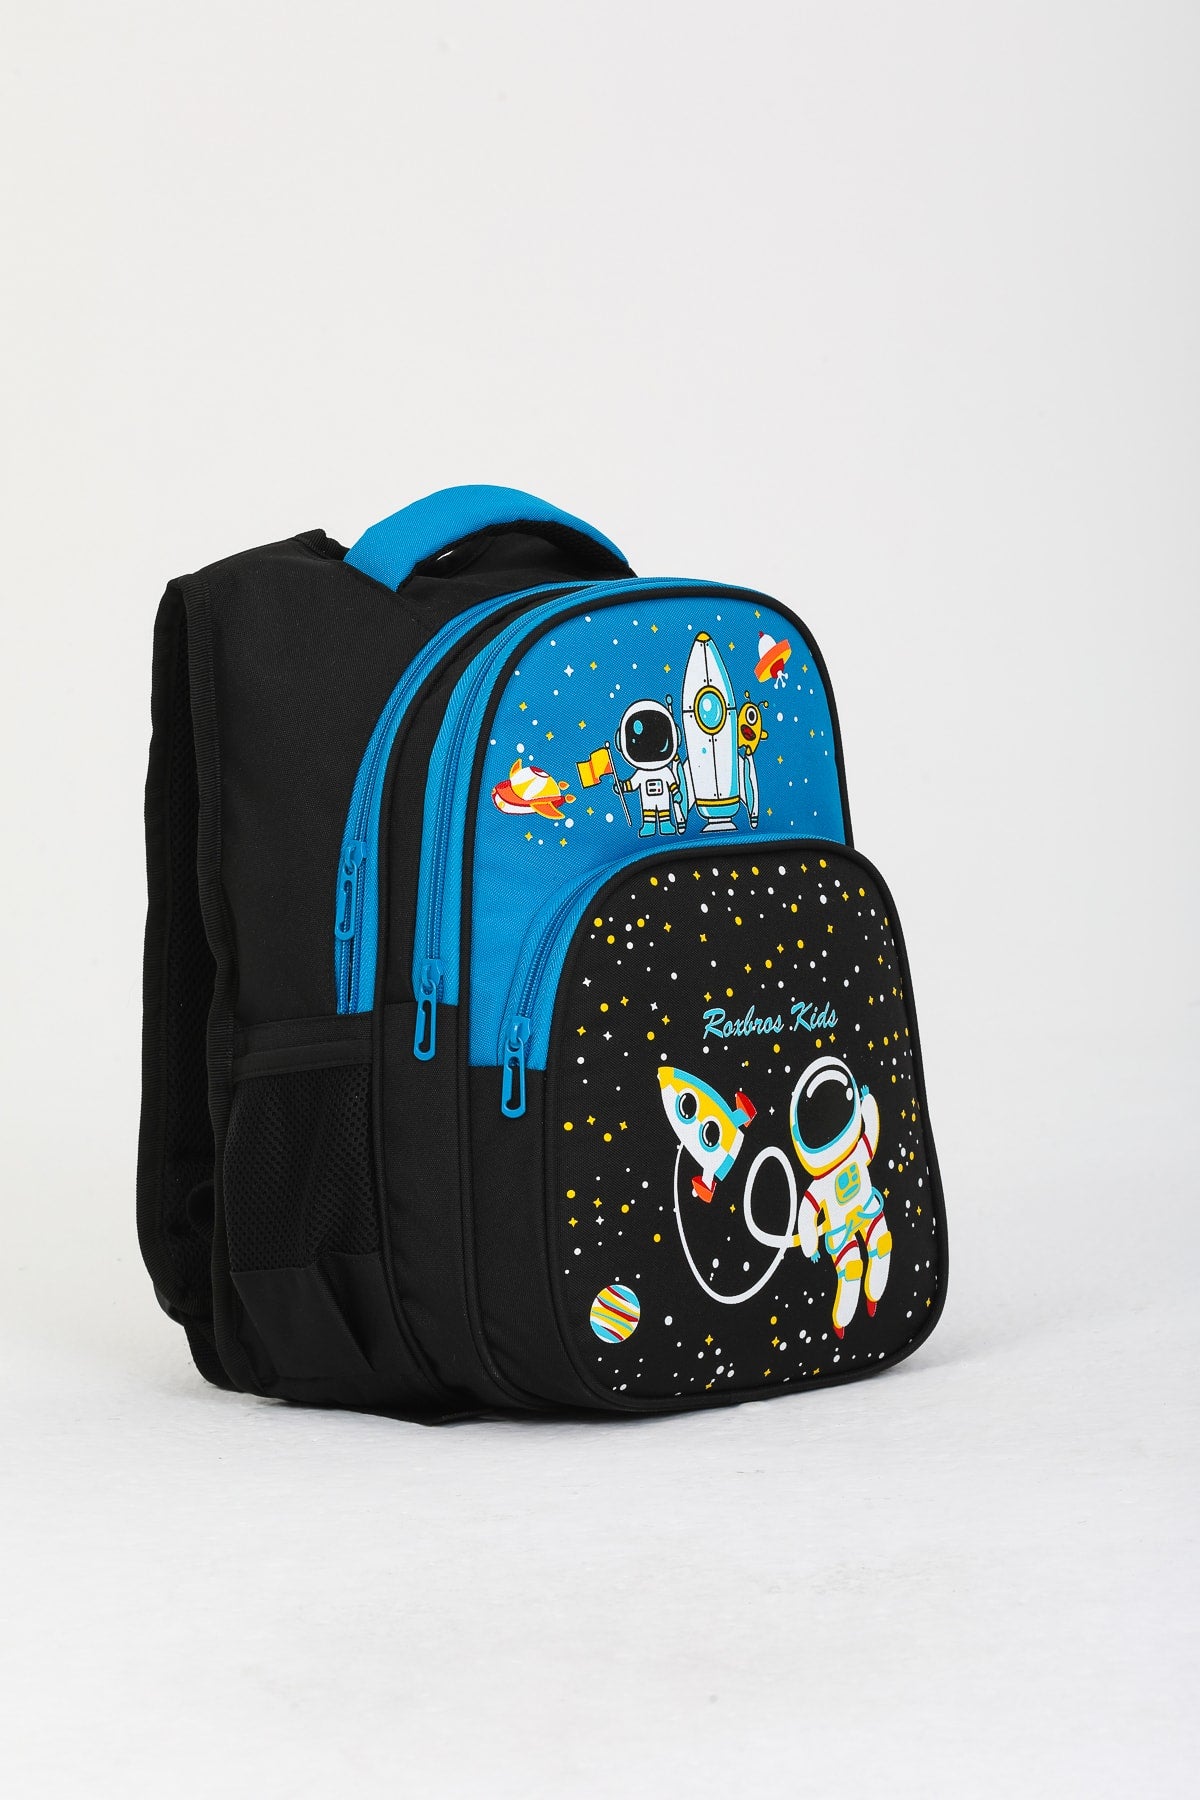 Astronaut Kids Space Primary School Bag Lunch Box Boys-girls